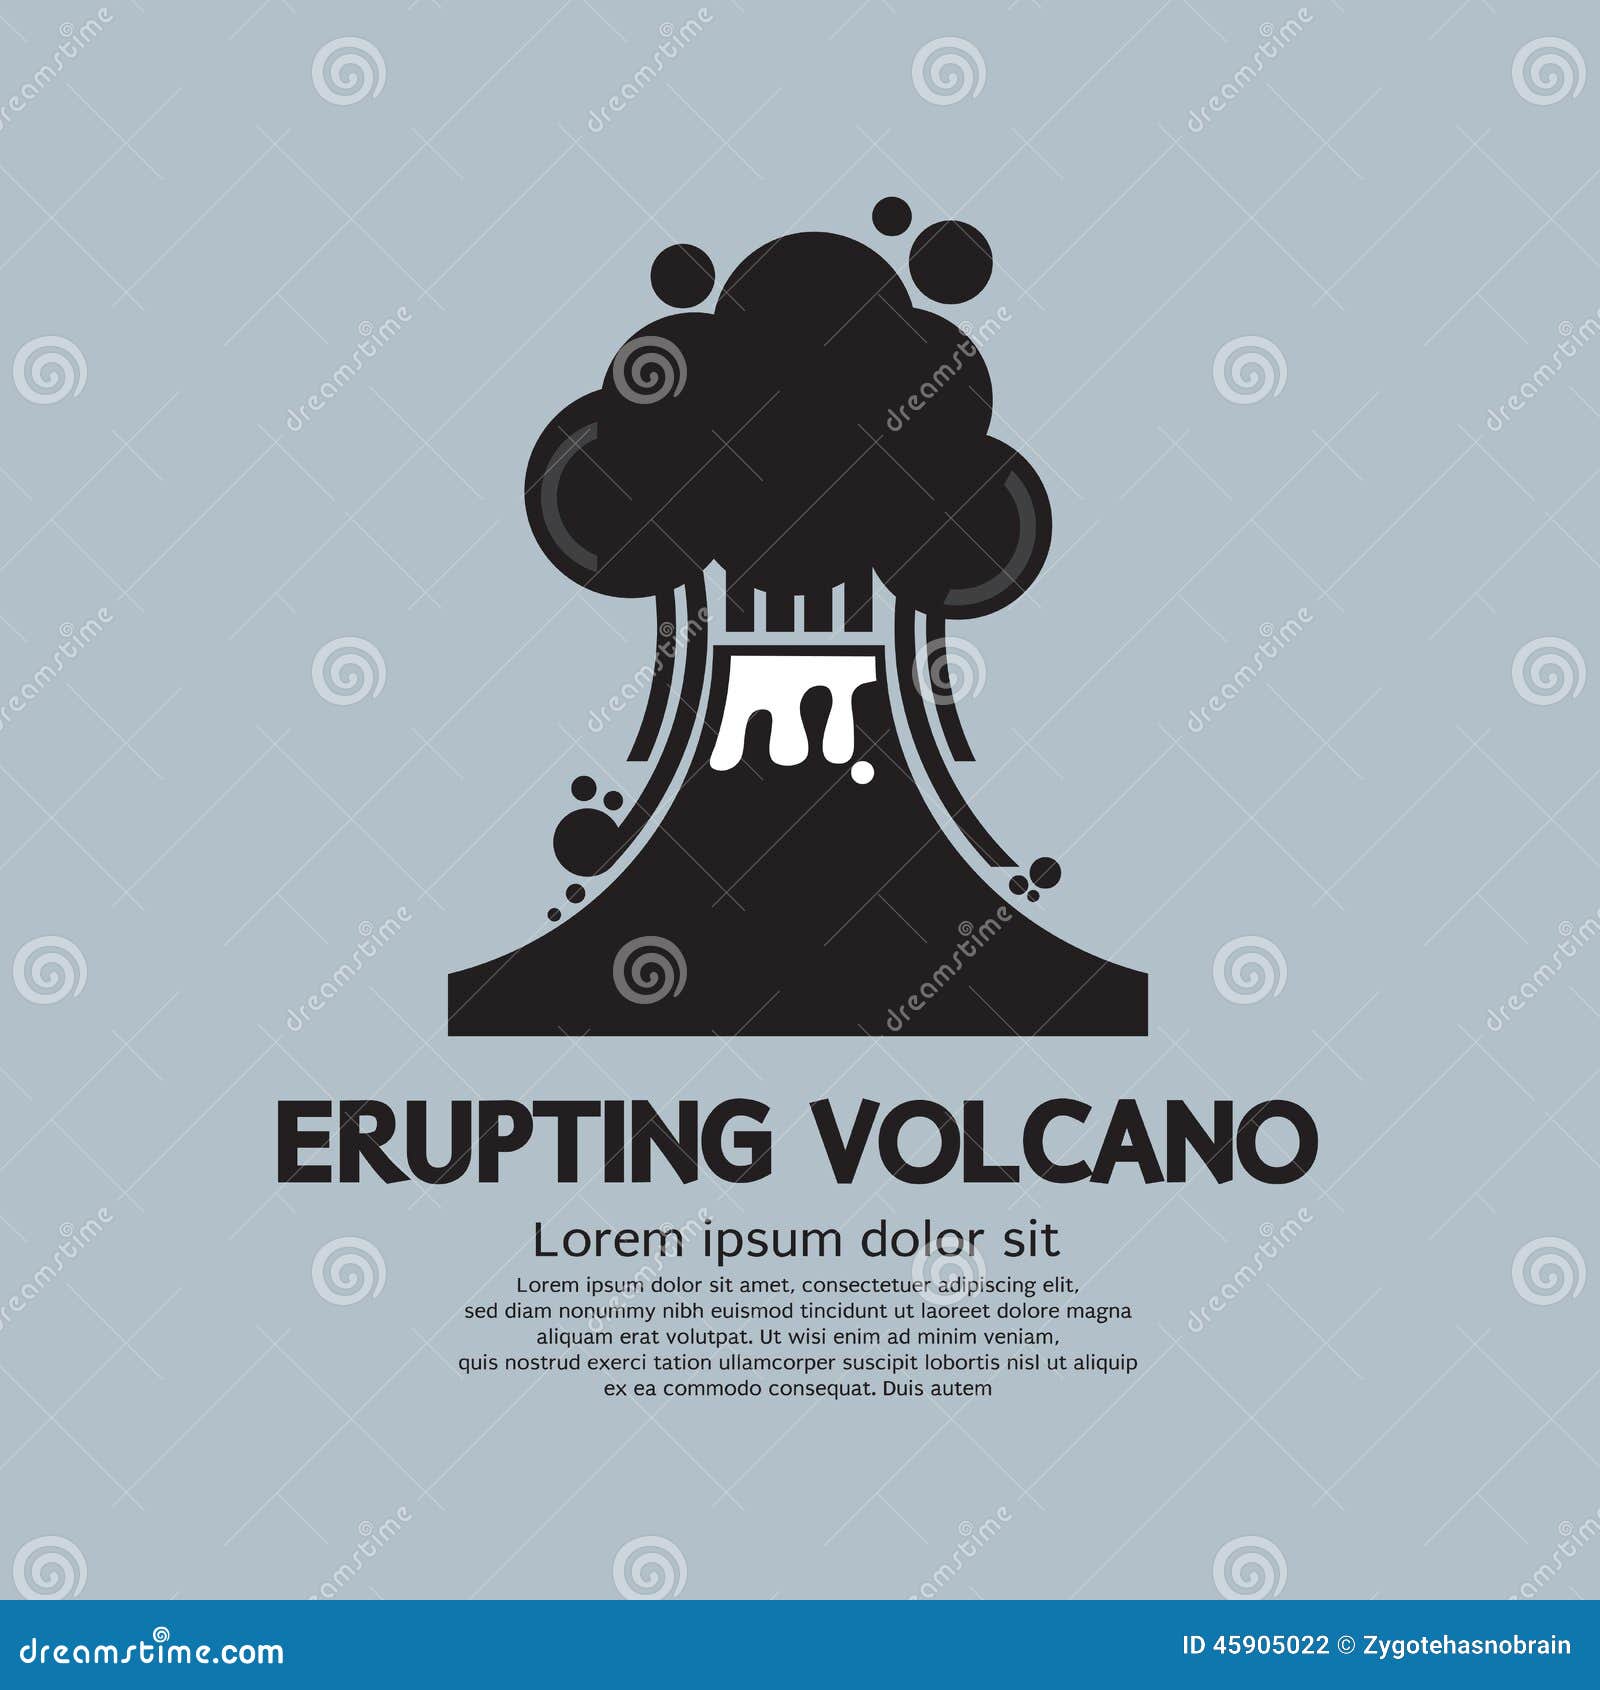 erupting volcano natural disaster